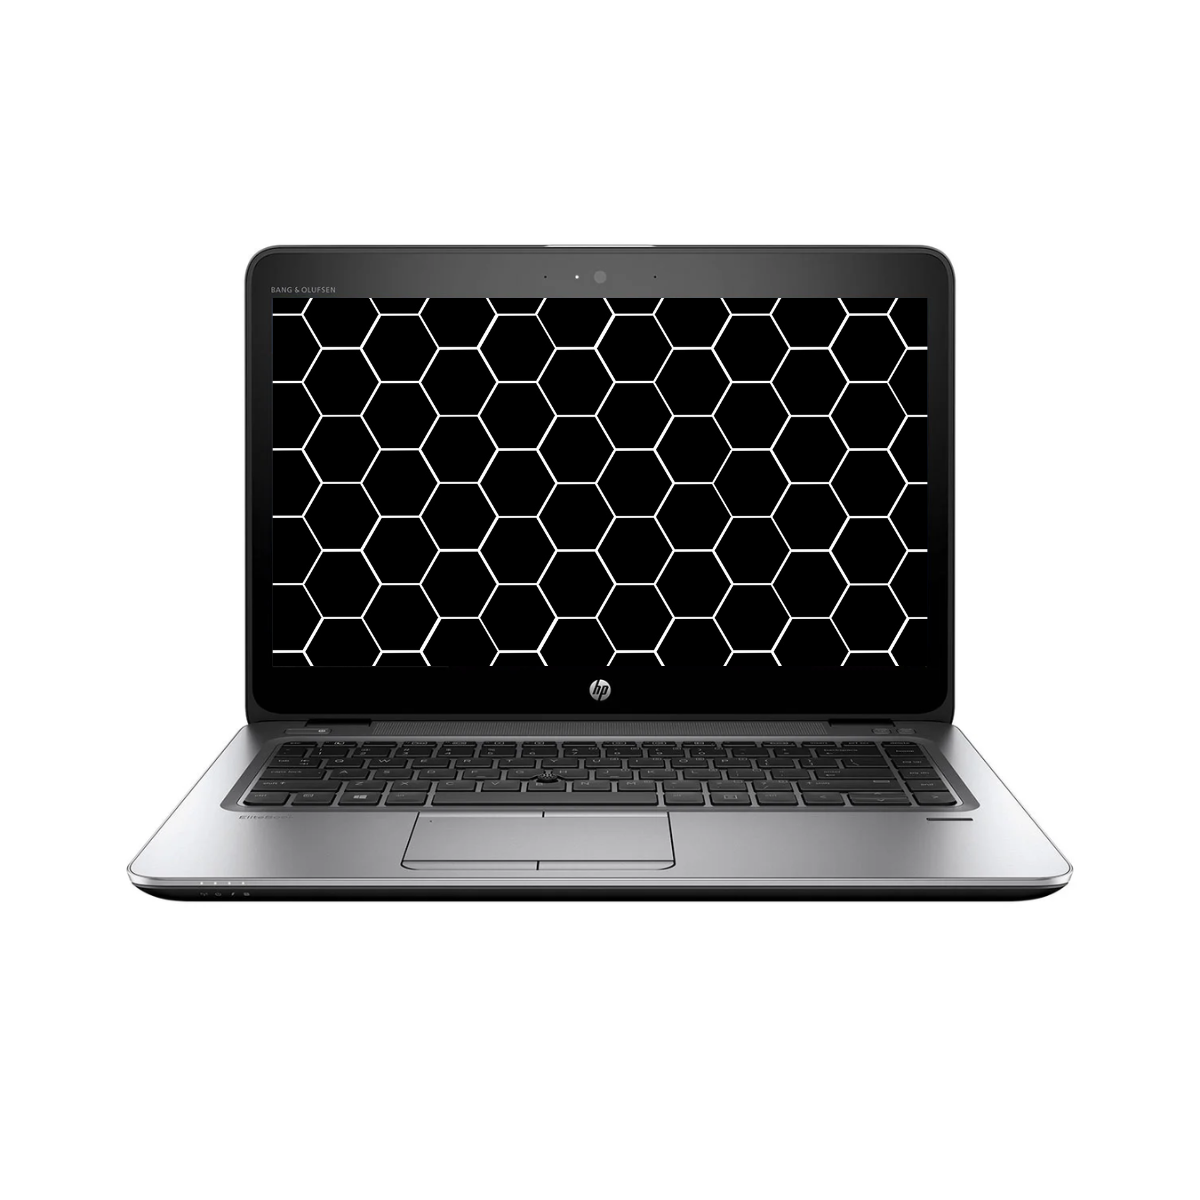 HP EliteBook 820 G3 i7 (6th Gen) 8GB RAM 256GB SSD 12.5